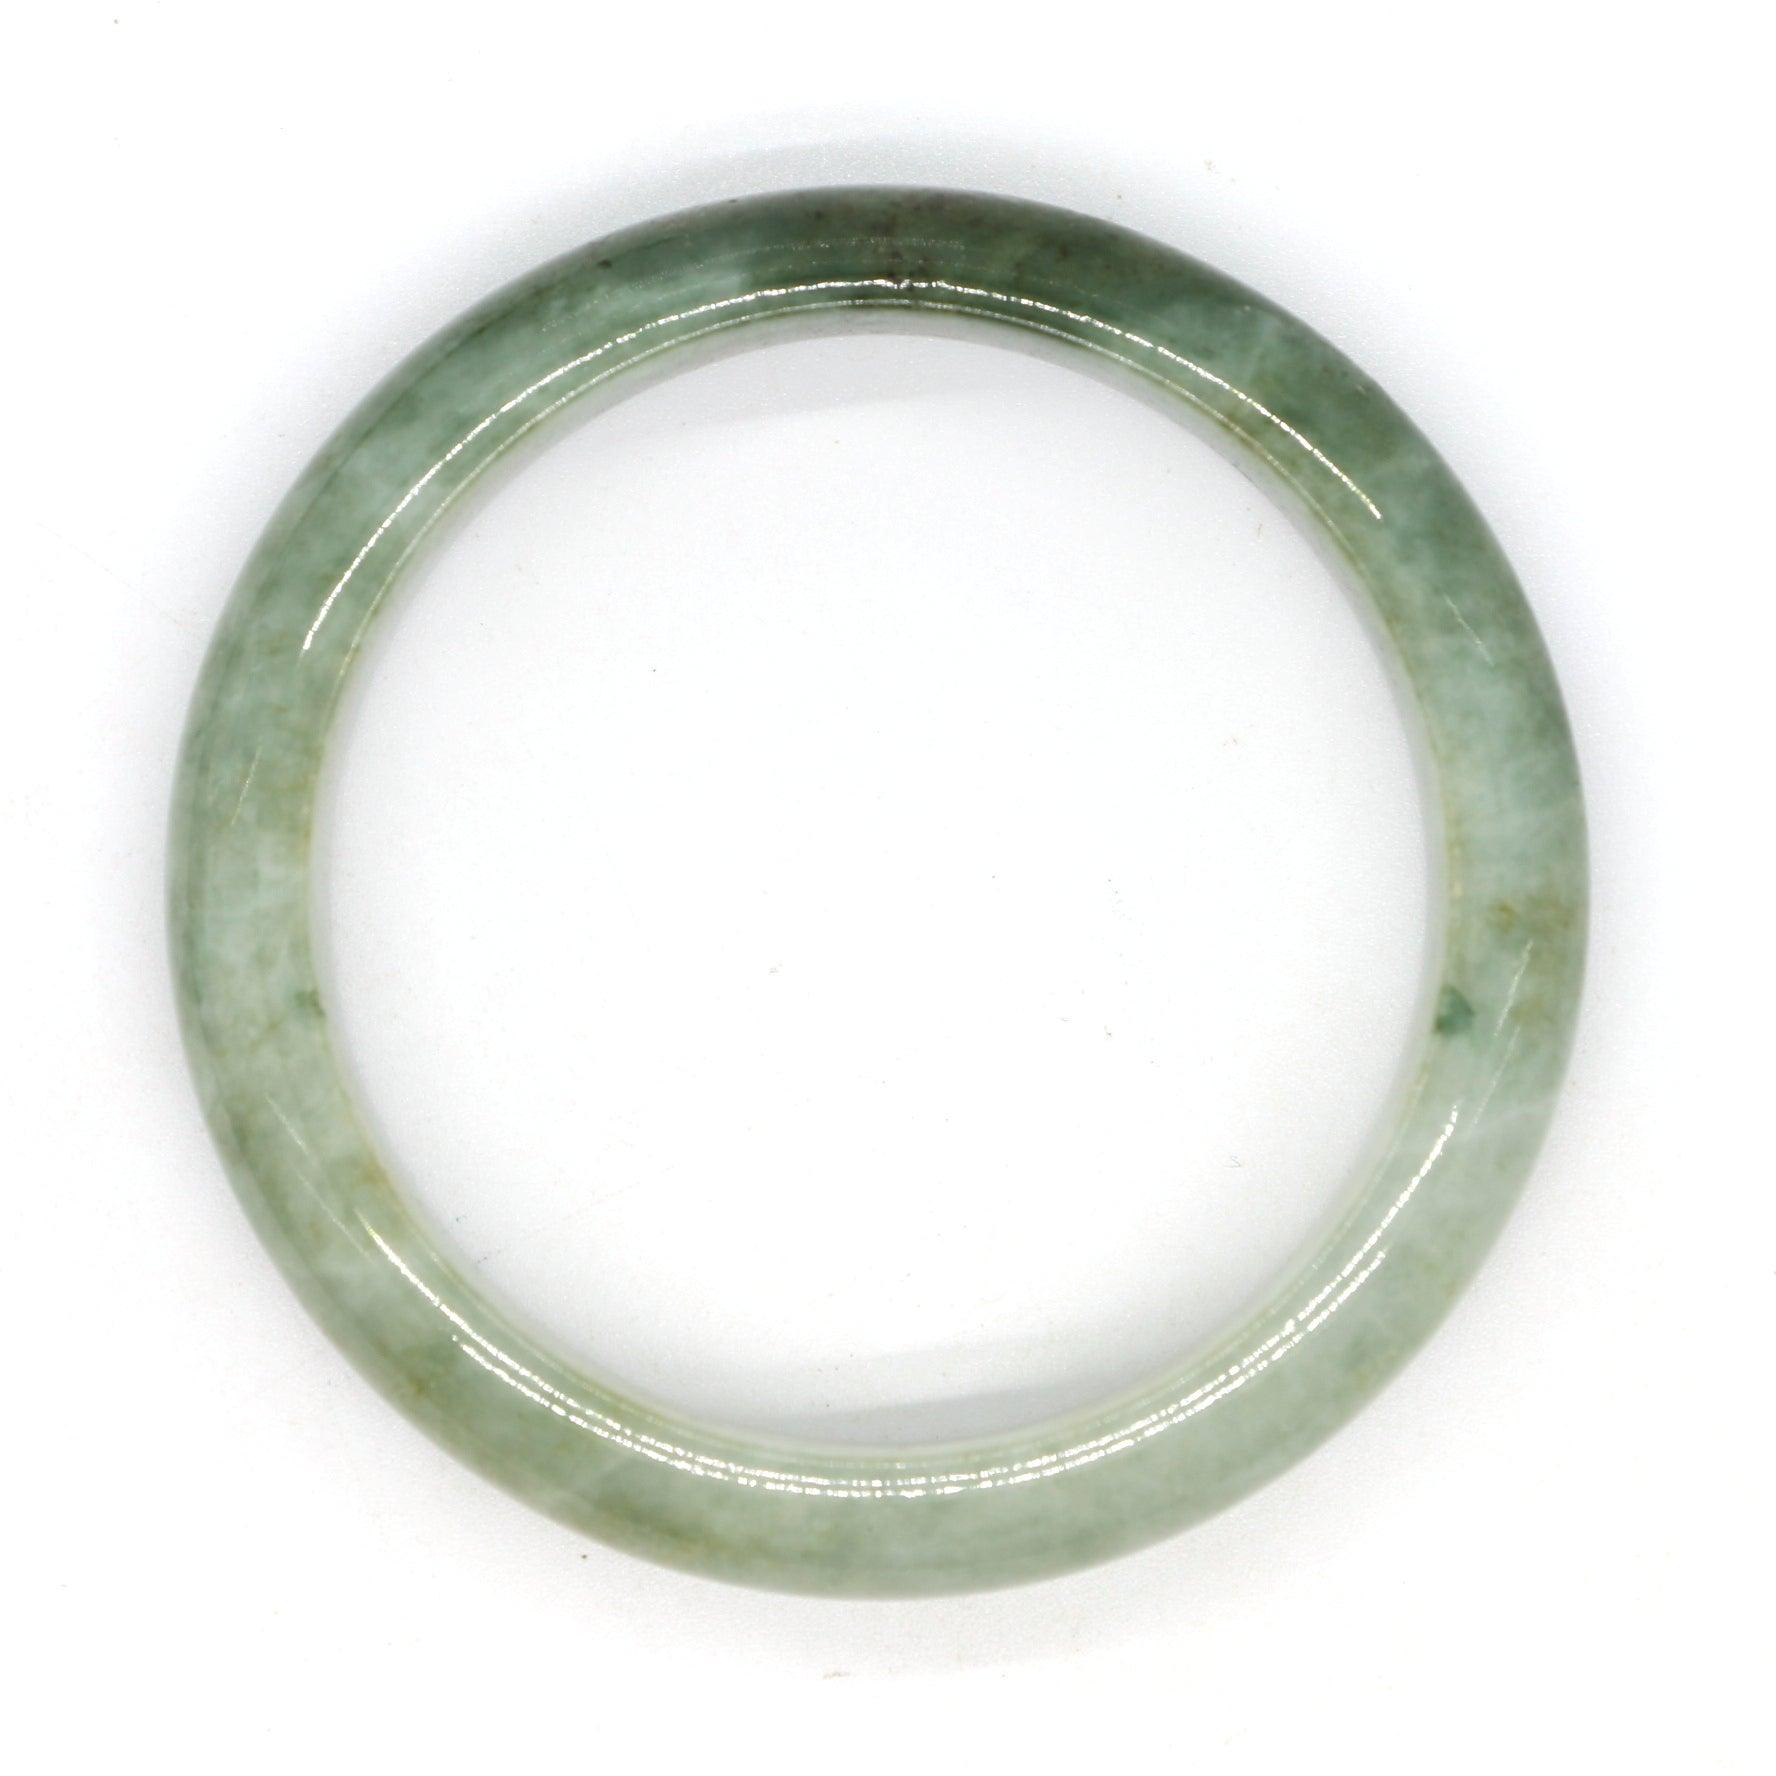 Type A Certified Jadeite Jade Bangle Size 56 -58mm B0BN7TS73R - Jade-collector.com